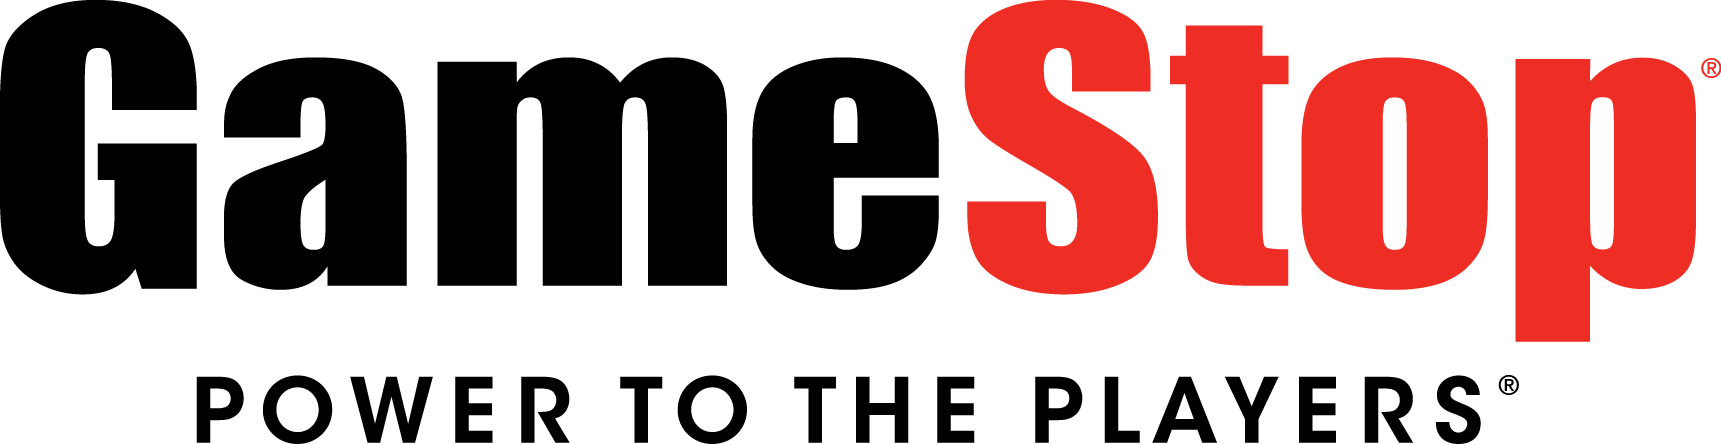 Logo of Autism Speaks